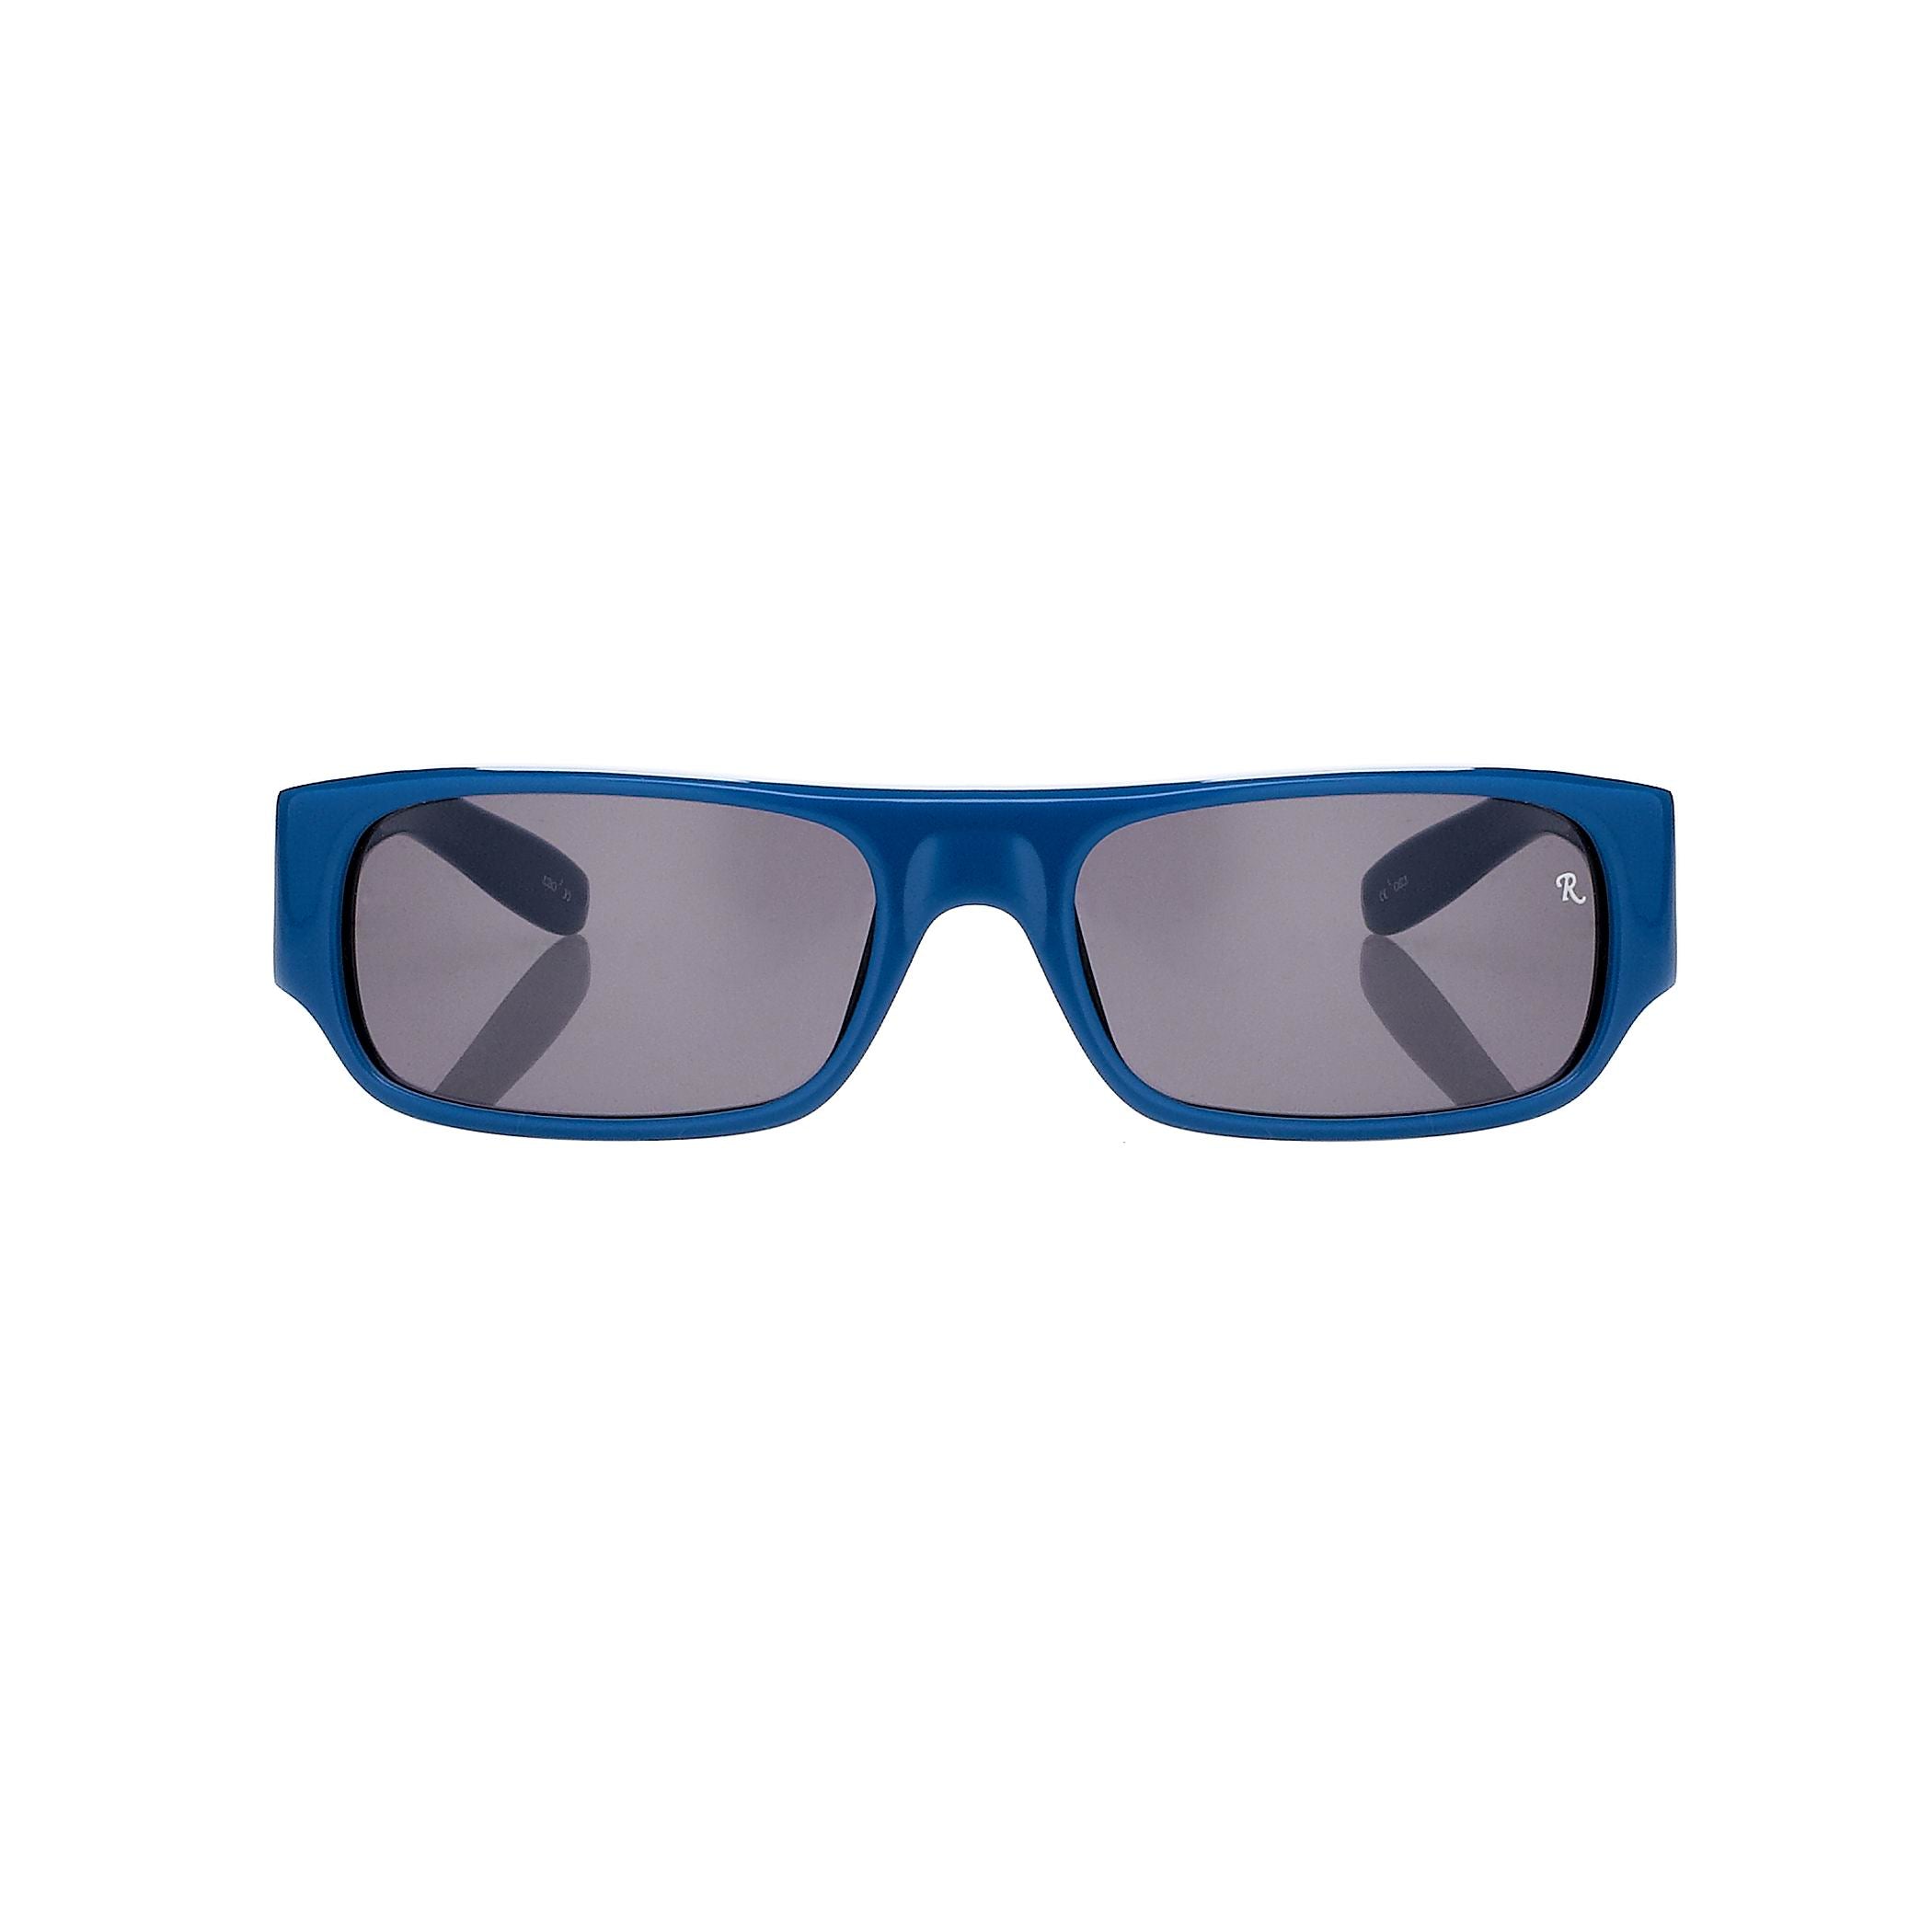 Raf Simons 9 C5 Sunglasses by LINDA FARROW – LINDA 